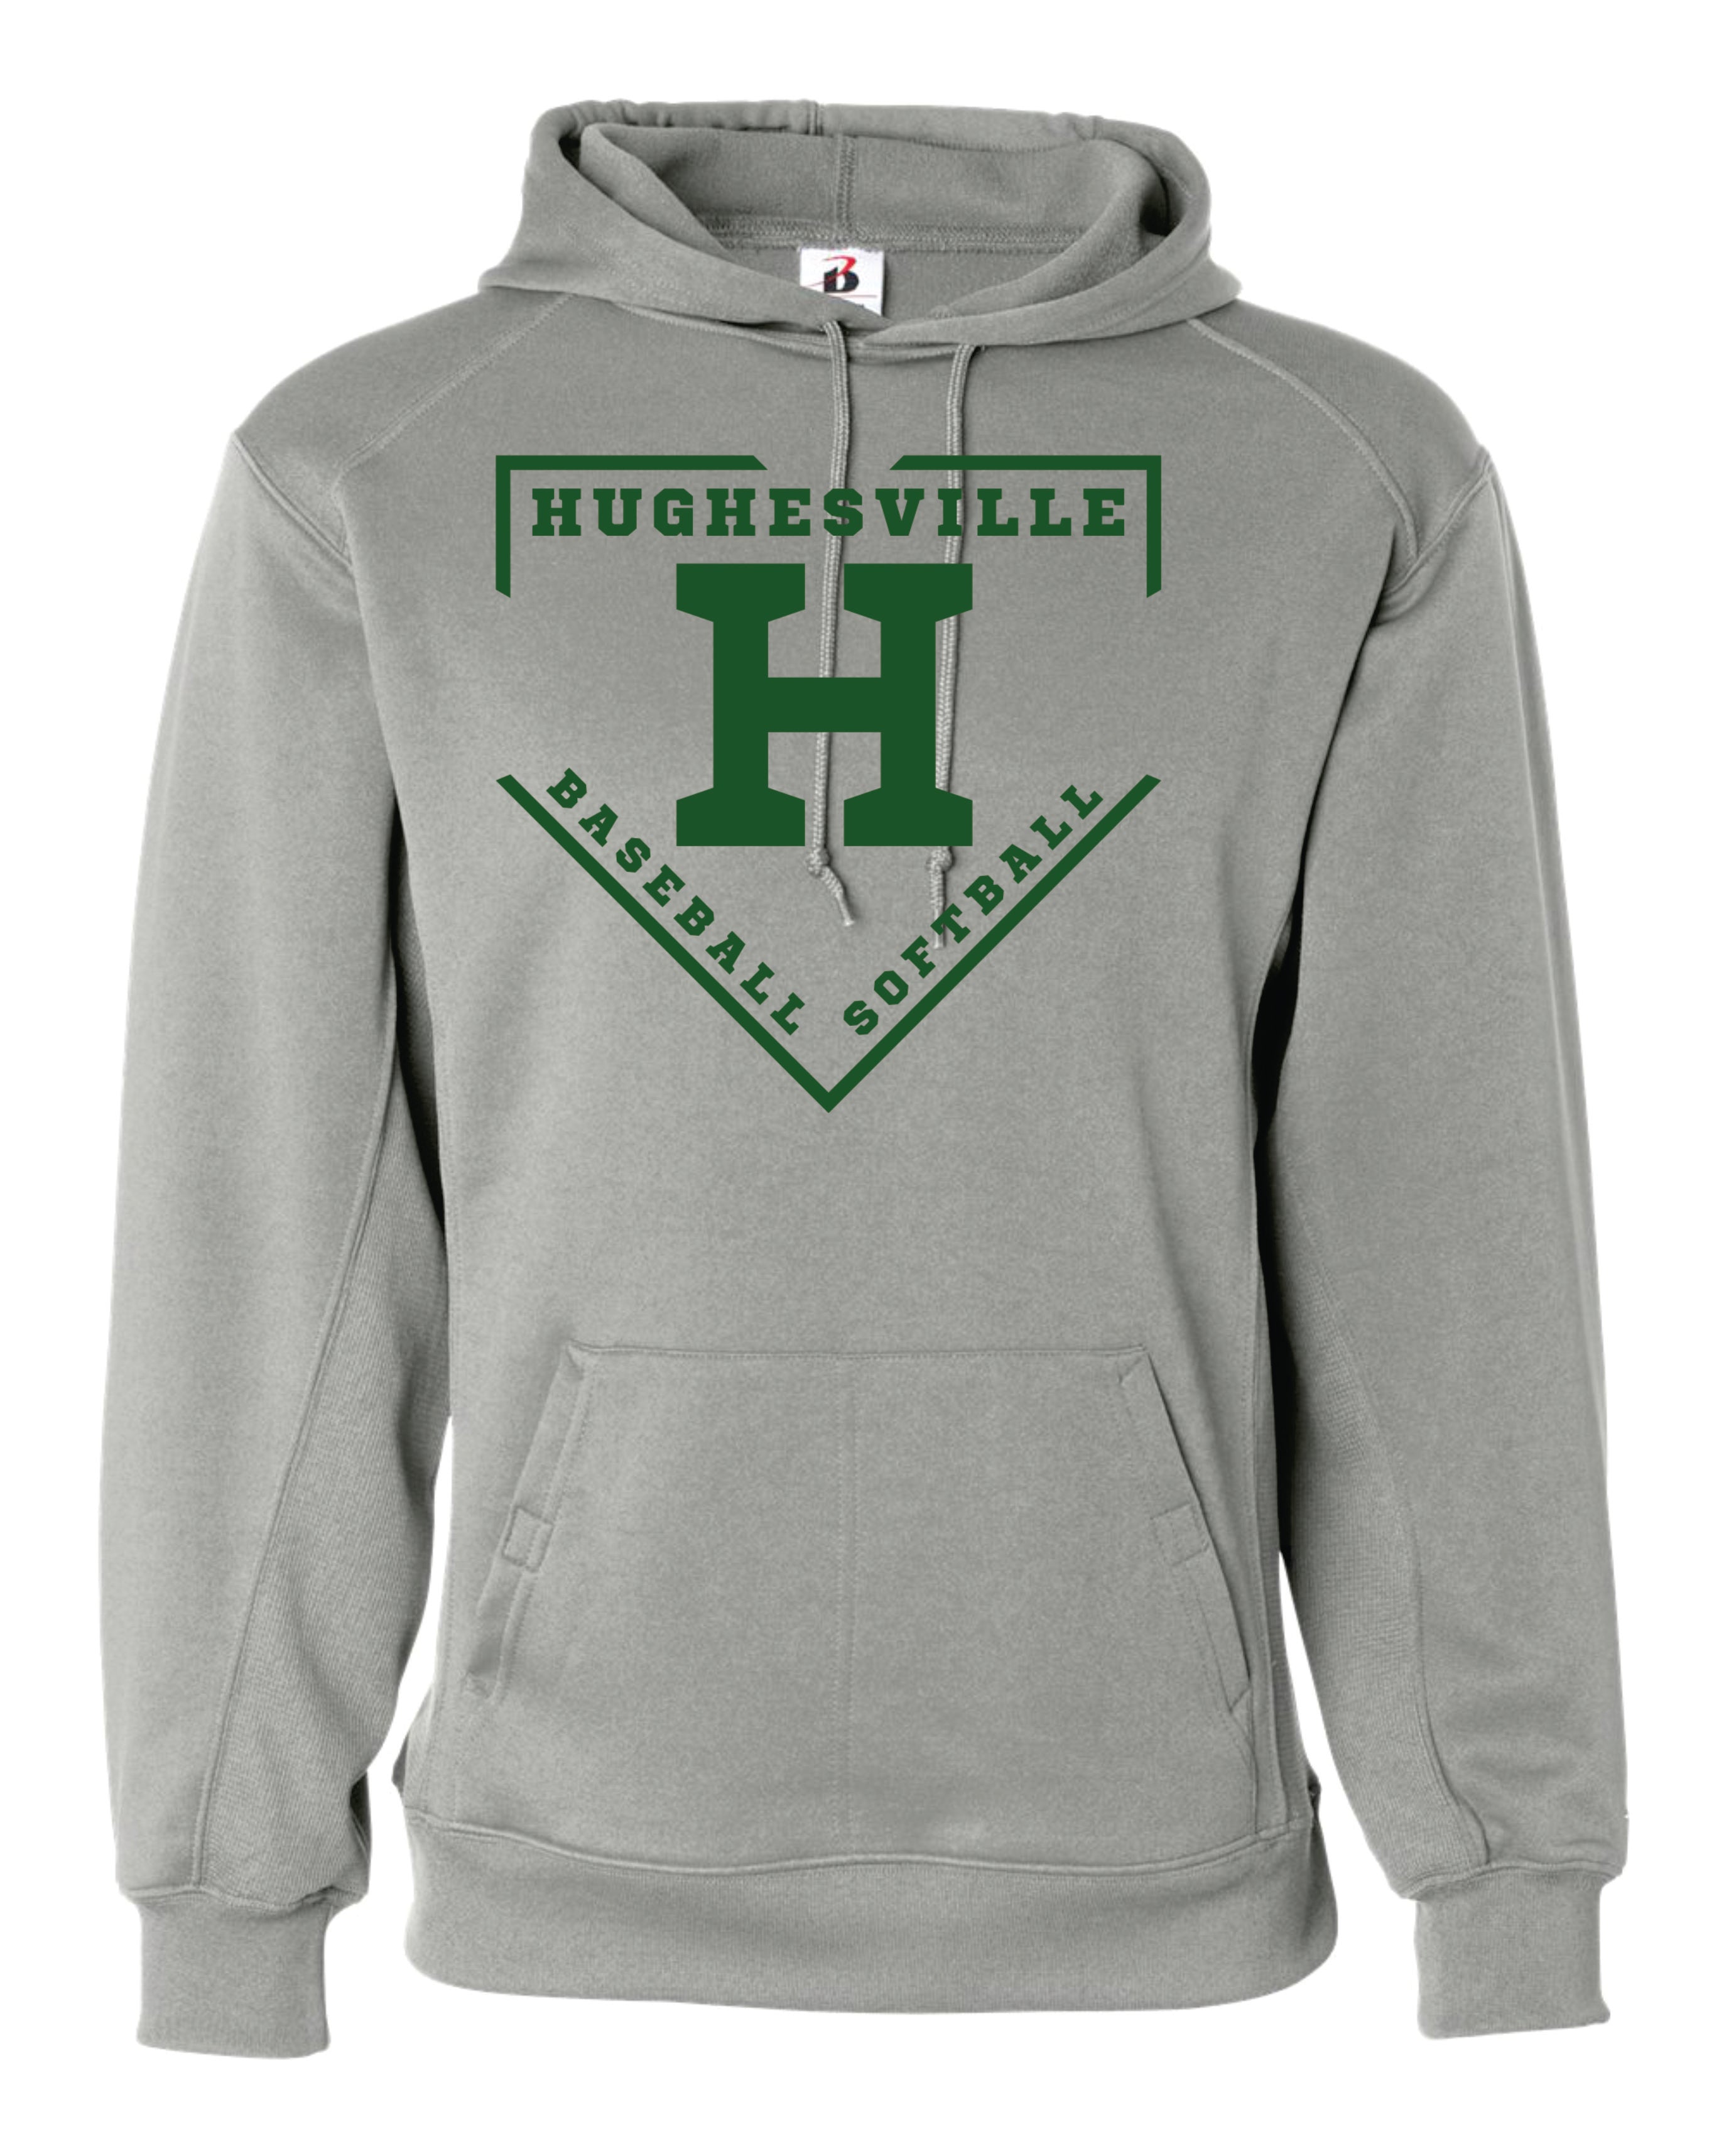 Hughesville Little League Badger Dri-fit Hoodie YOUTH